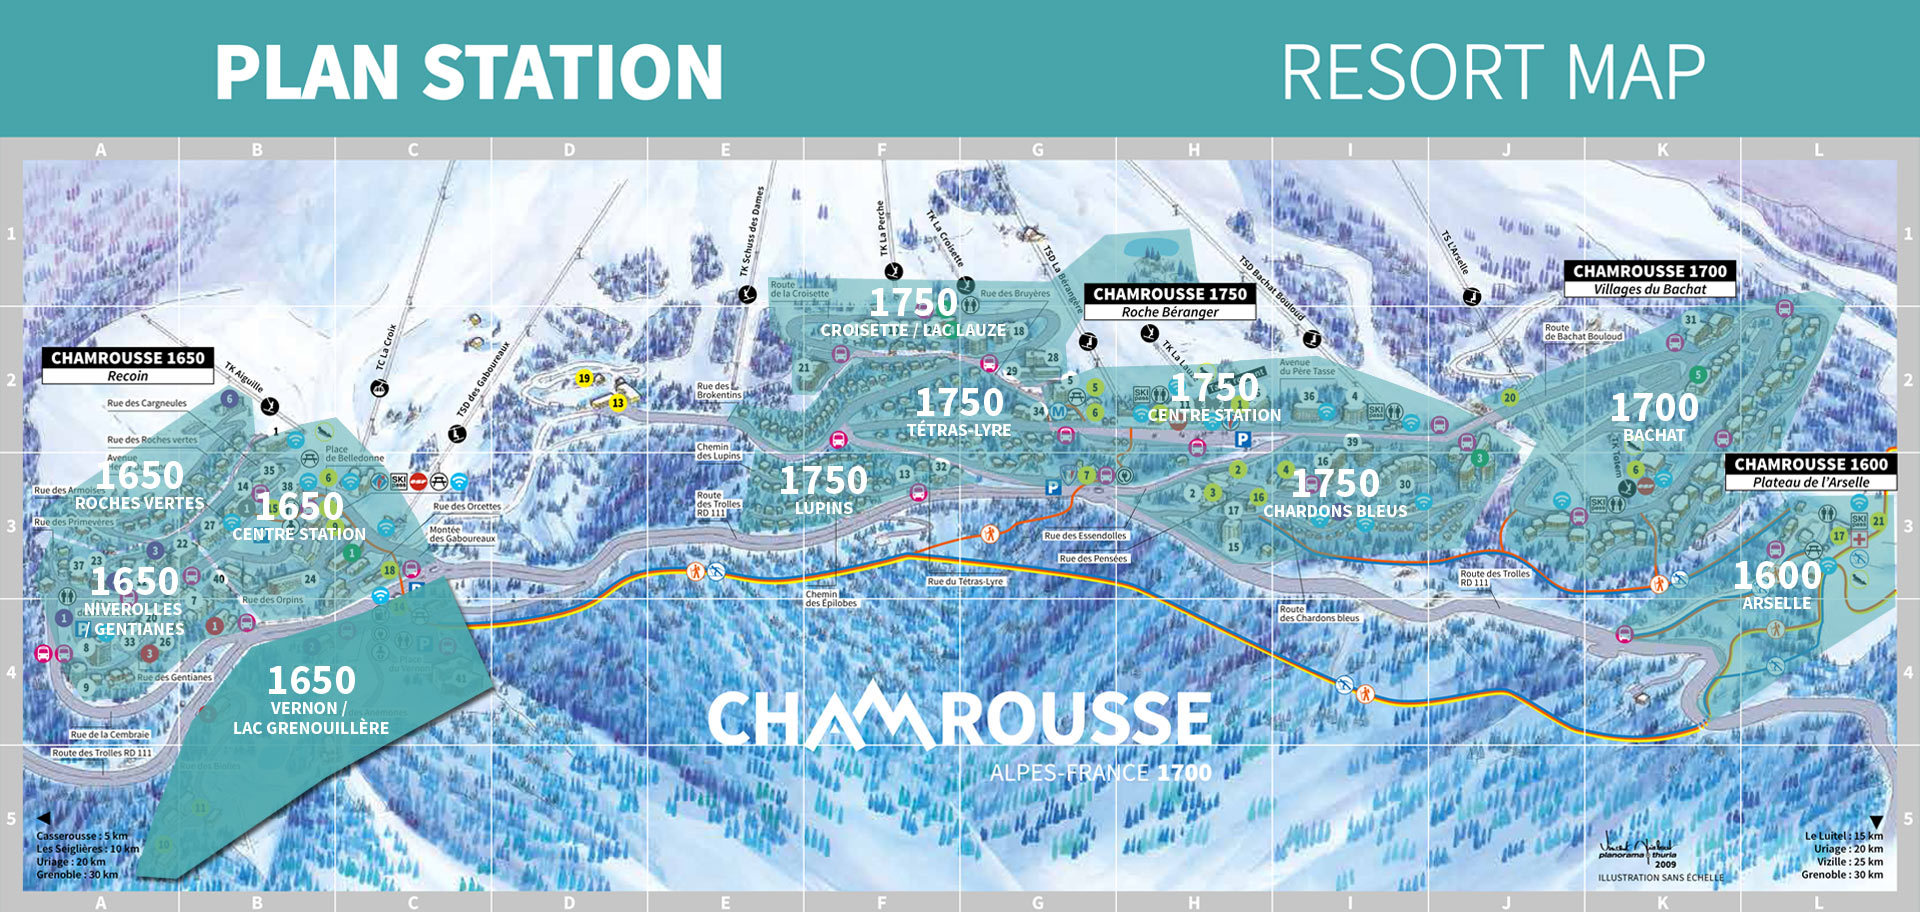 Chamrousse plan station zone 1650 vernon lac grenouillère quartier station ski montagne grenoble isère alpes france